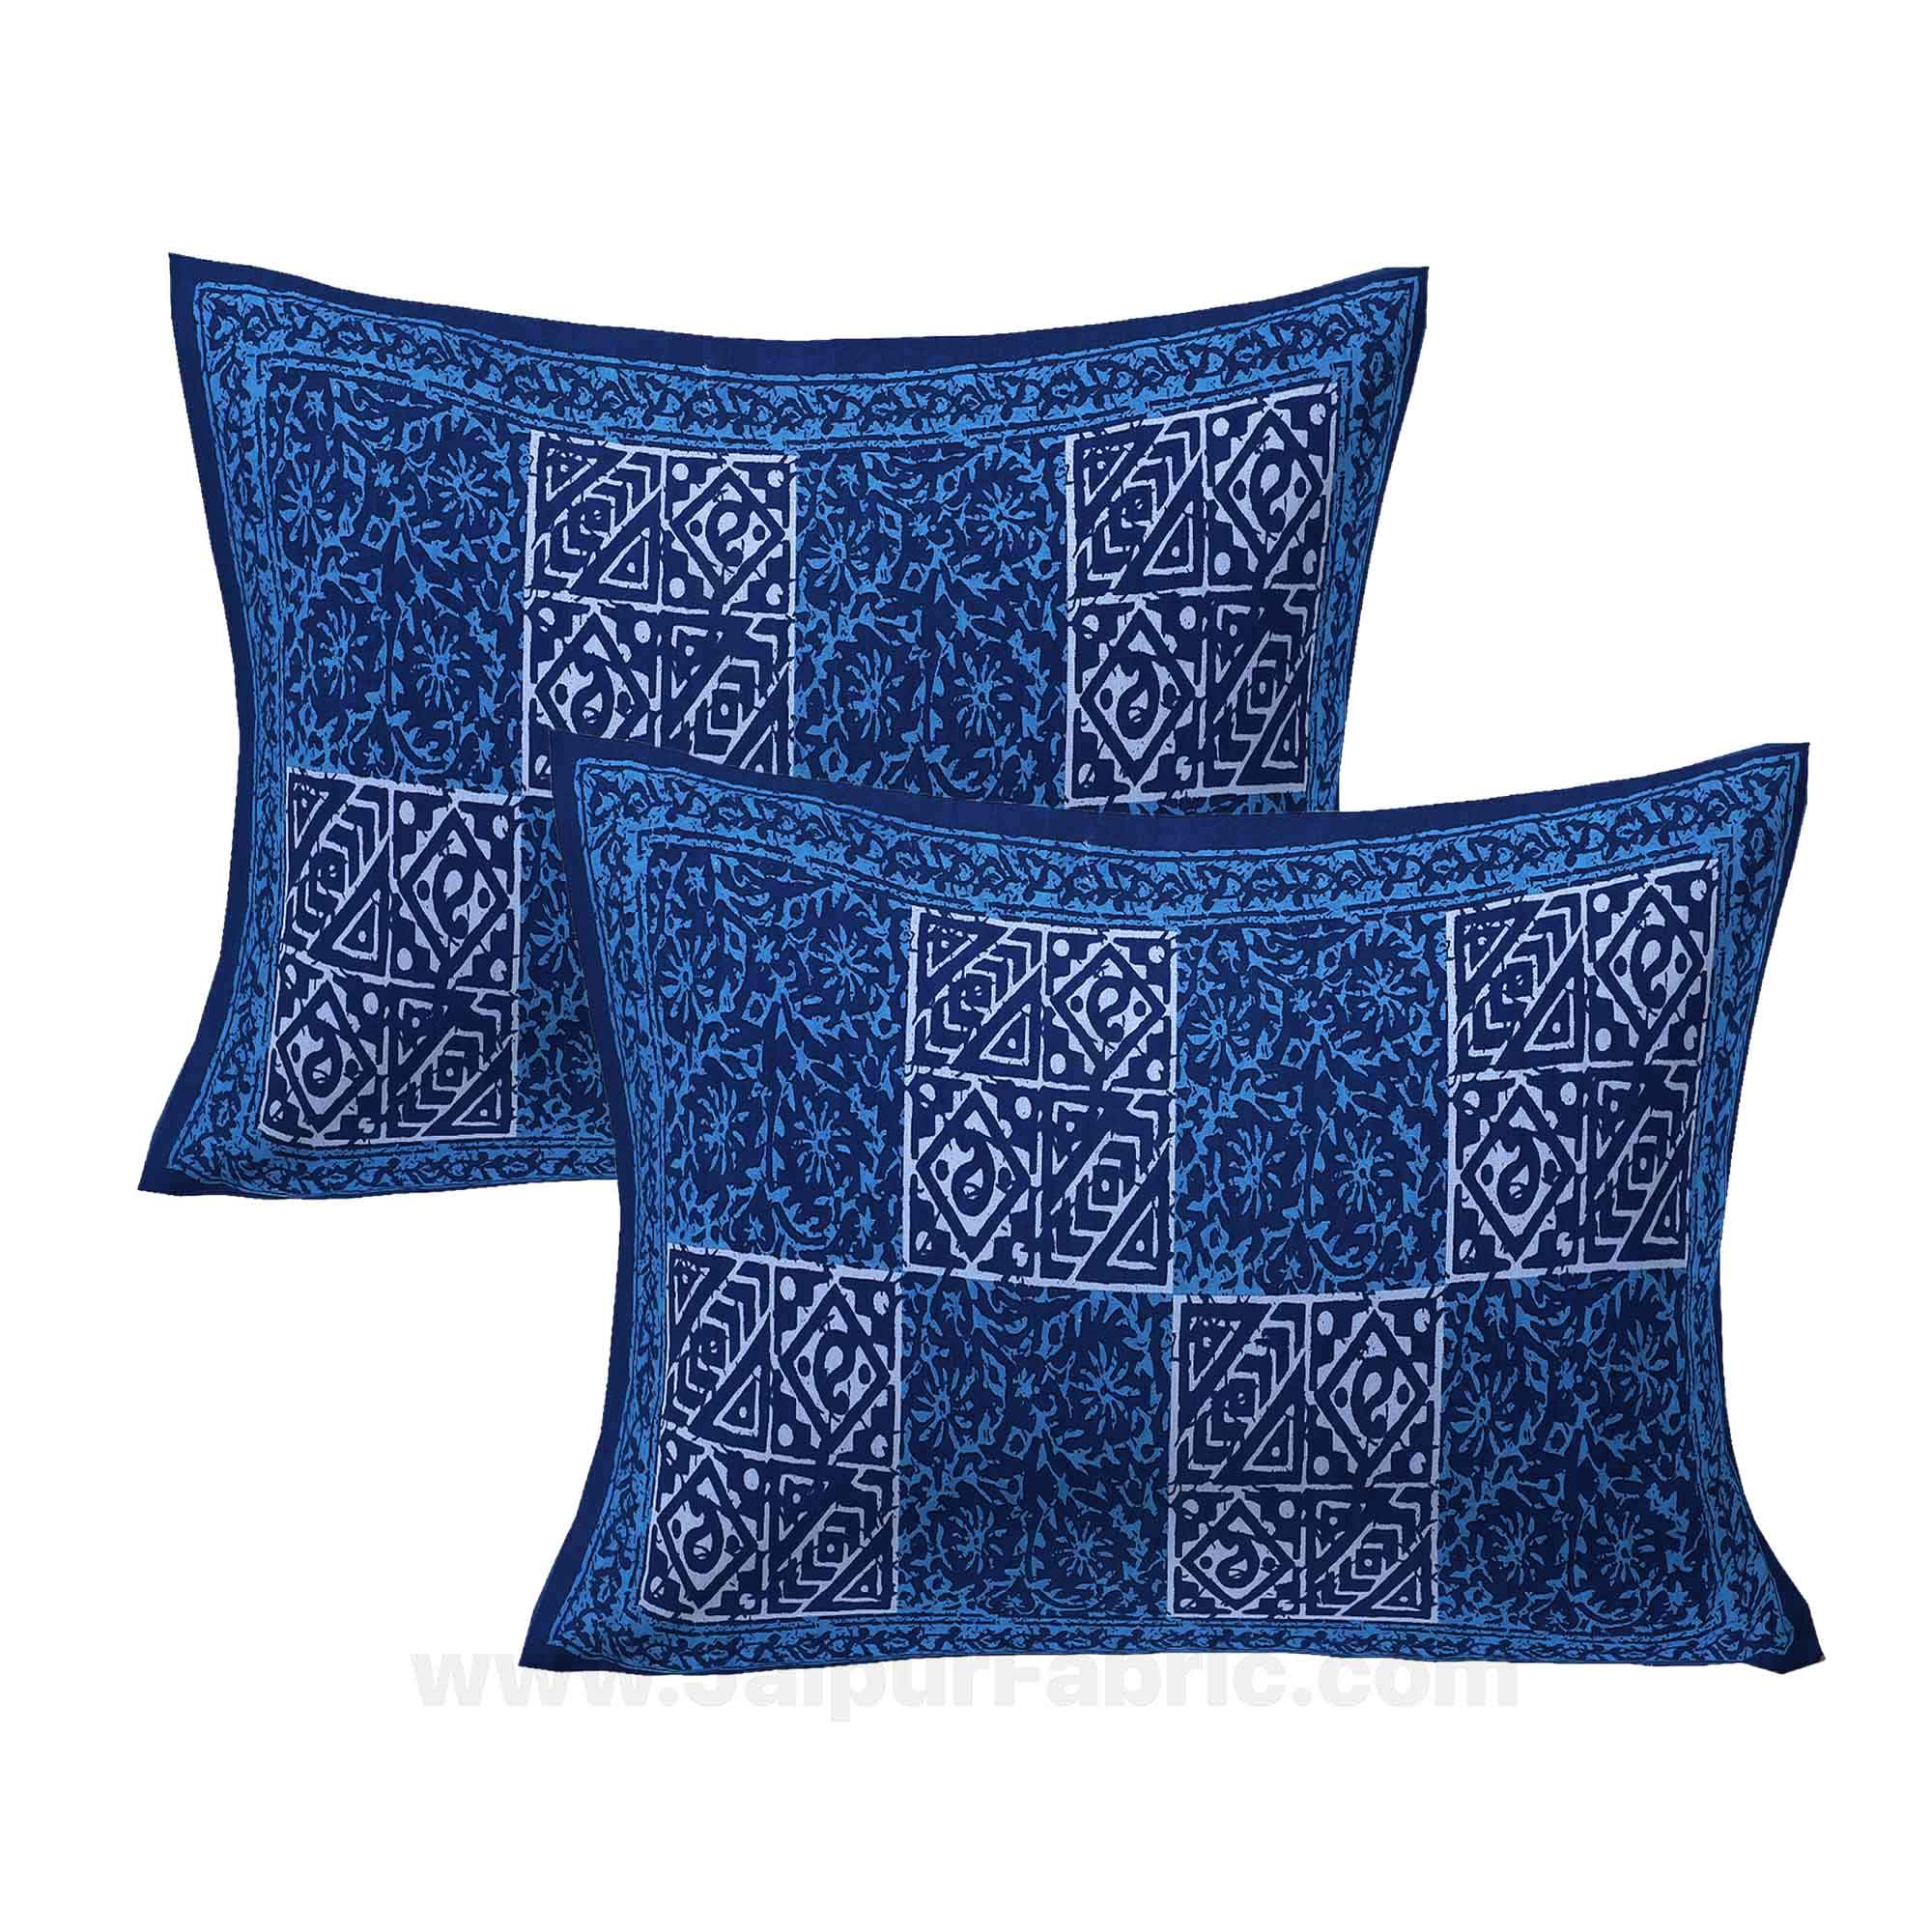 Royal Blue Check Pure Cotton Jaipuri Dabu Print Bedsheet